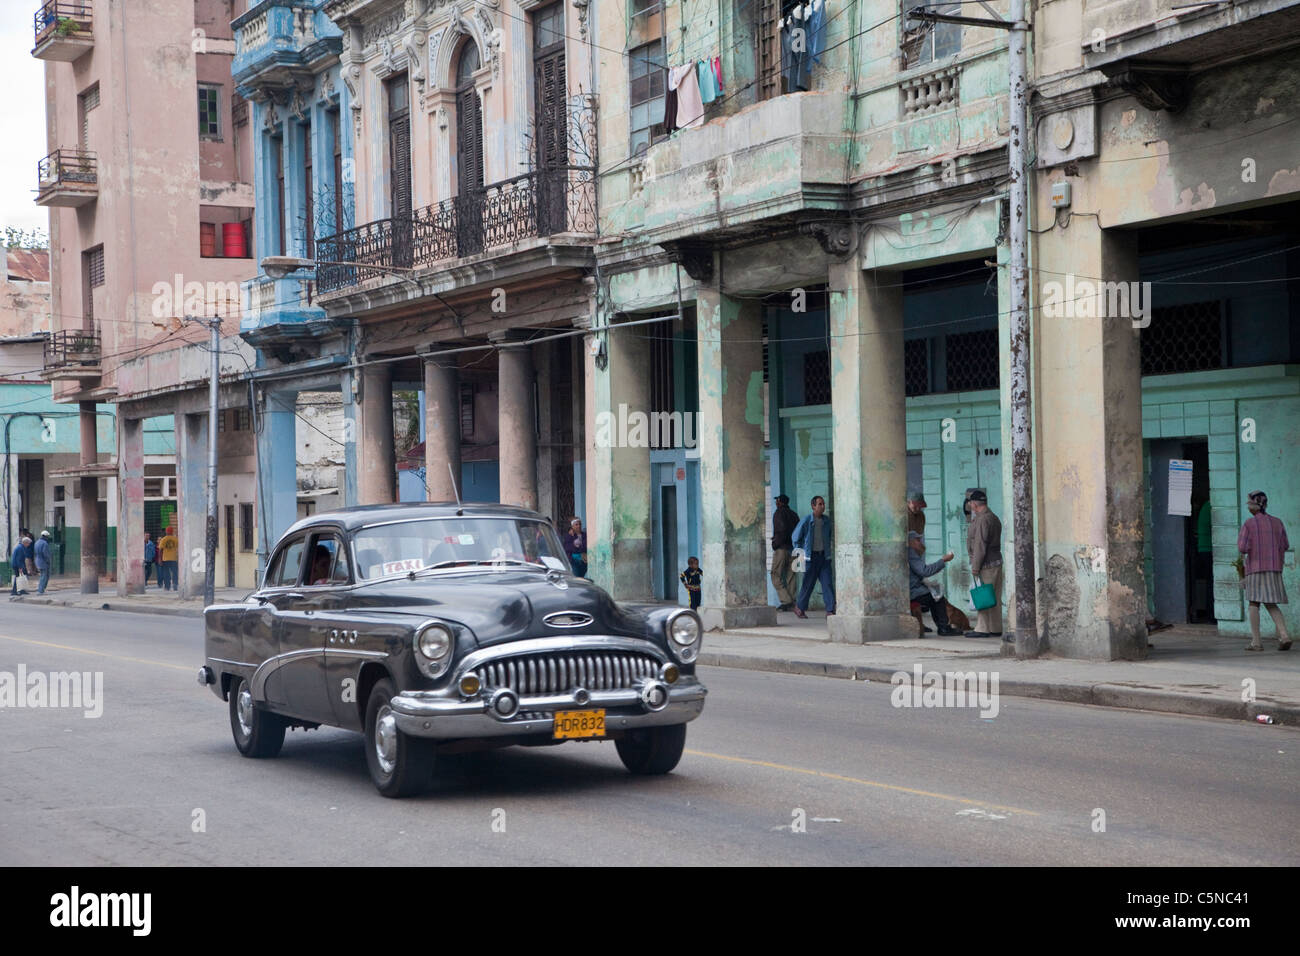 Cuba, La Habana. La mattina presto Central Havana Street scene, 1953 Buick. Foto Stock